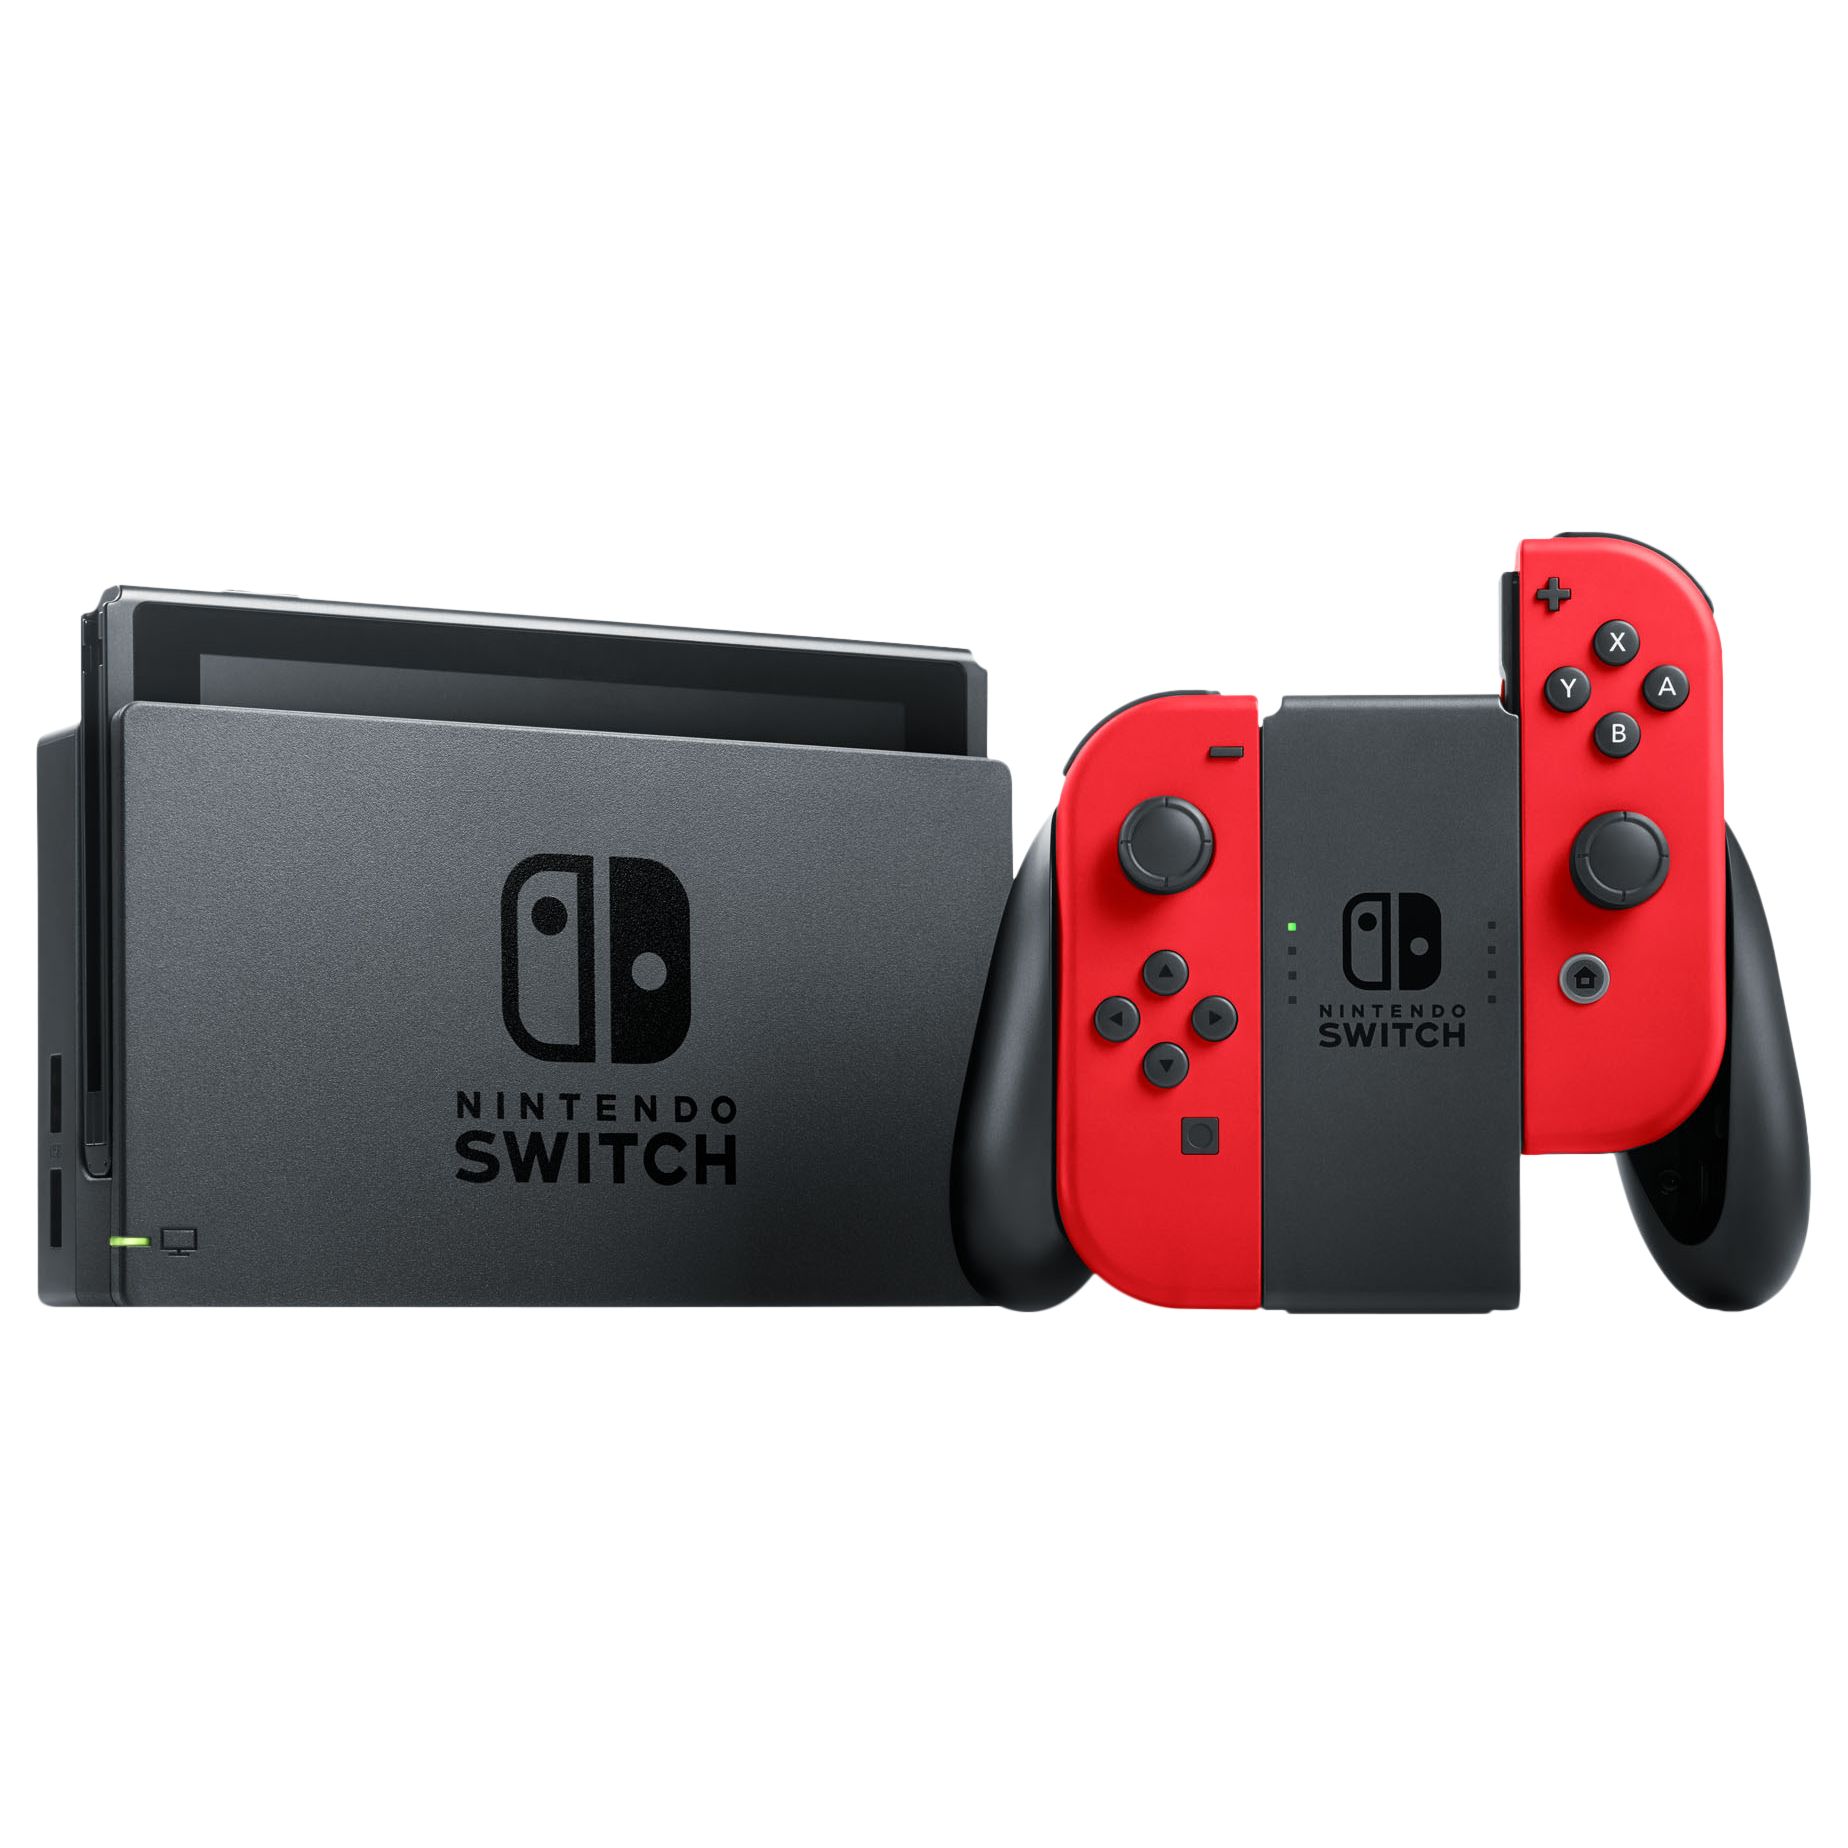 Nintendo v2. Приставка Нинтендо свитч. Игровая приставка Nintendo Switch. Игровая приставка Nintendo Switch 2. Nintendo Switch Hac-001.